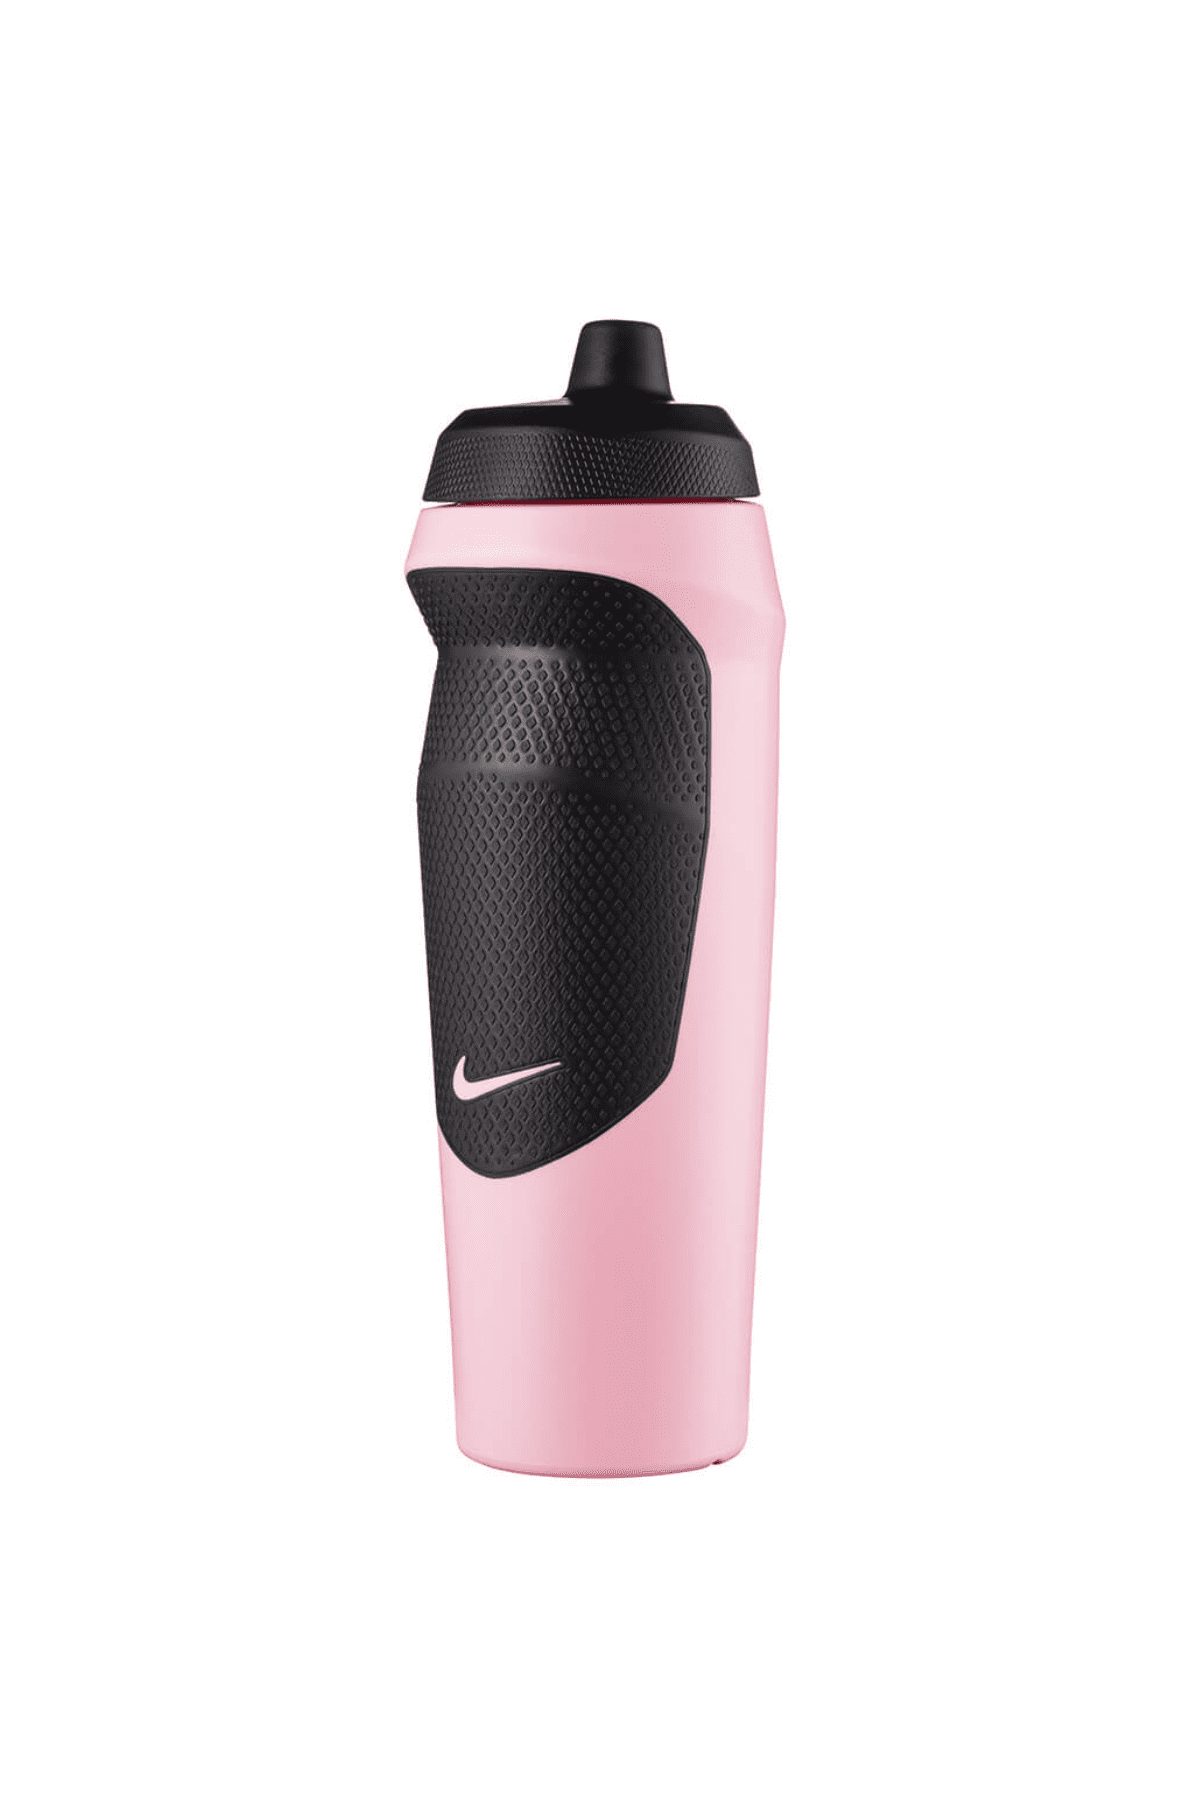 NIKE HYPERSPORT בקבוק שתייה נייק - בקבוק ספורט 590 מ"ל ורוד-Nike-One size-נאקו